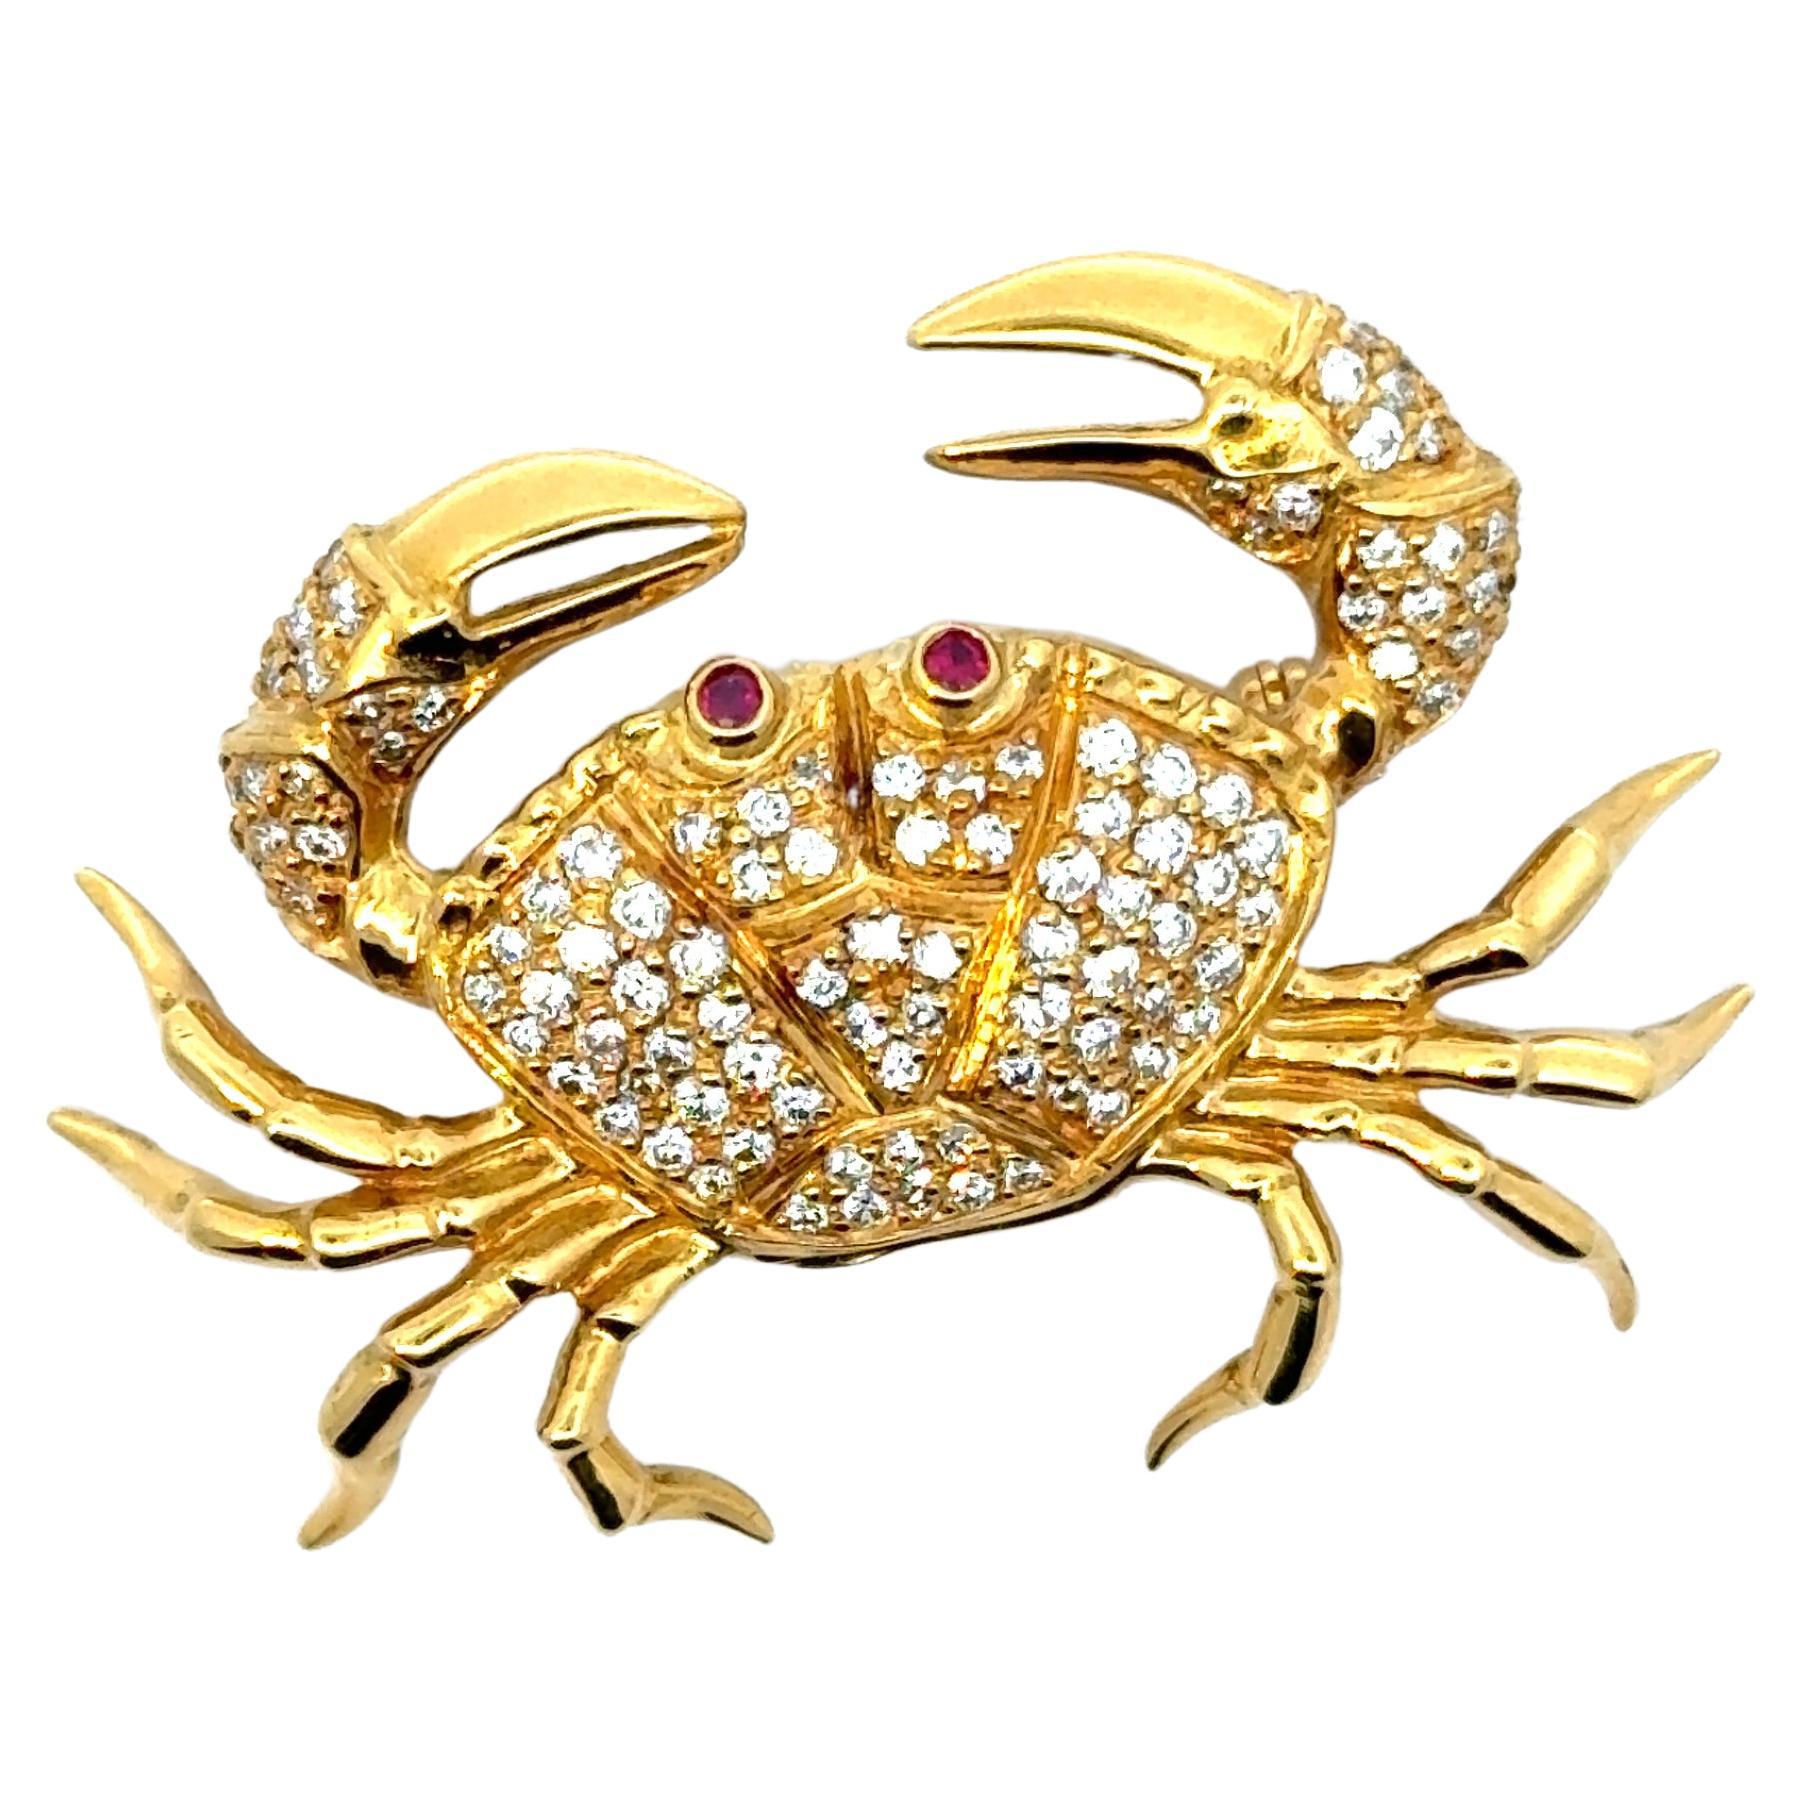 Diamond "Crab" Brooch